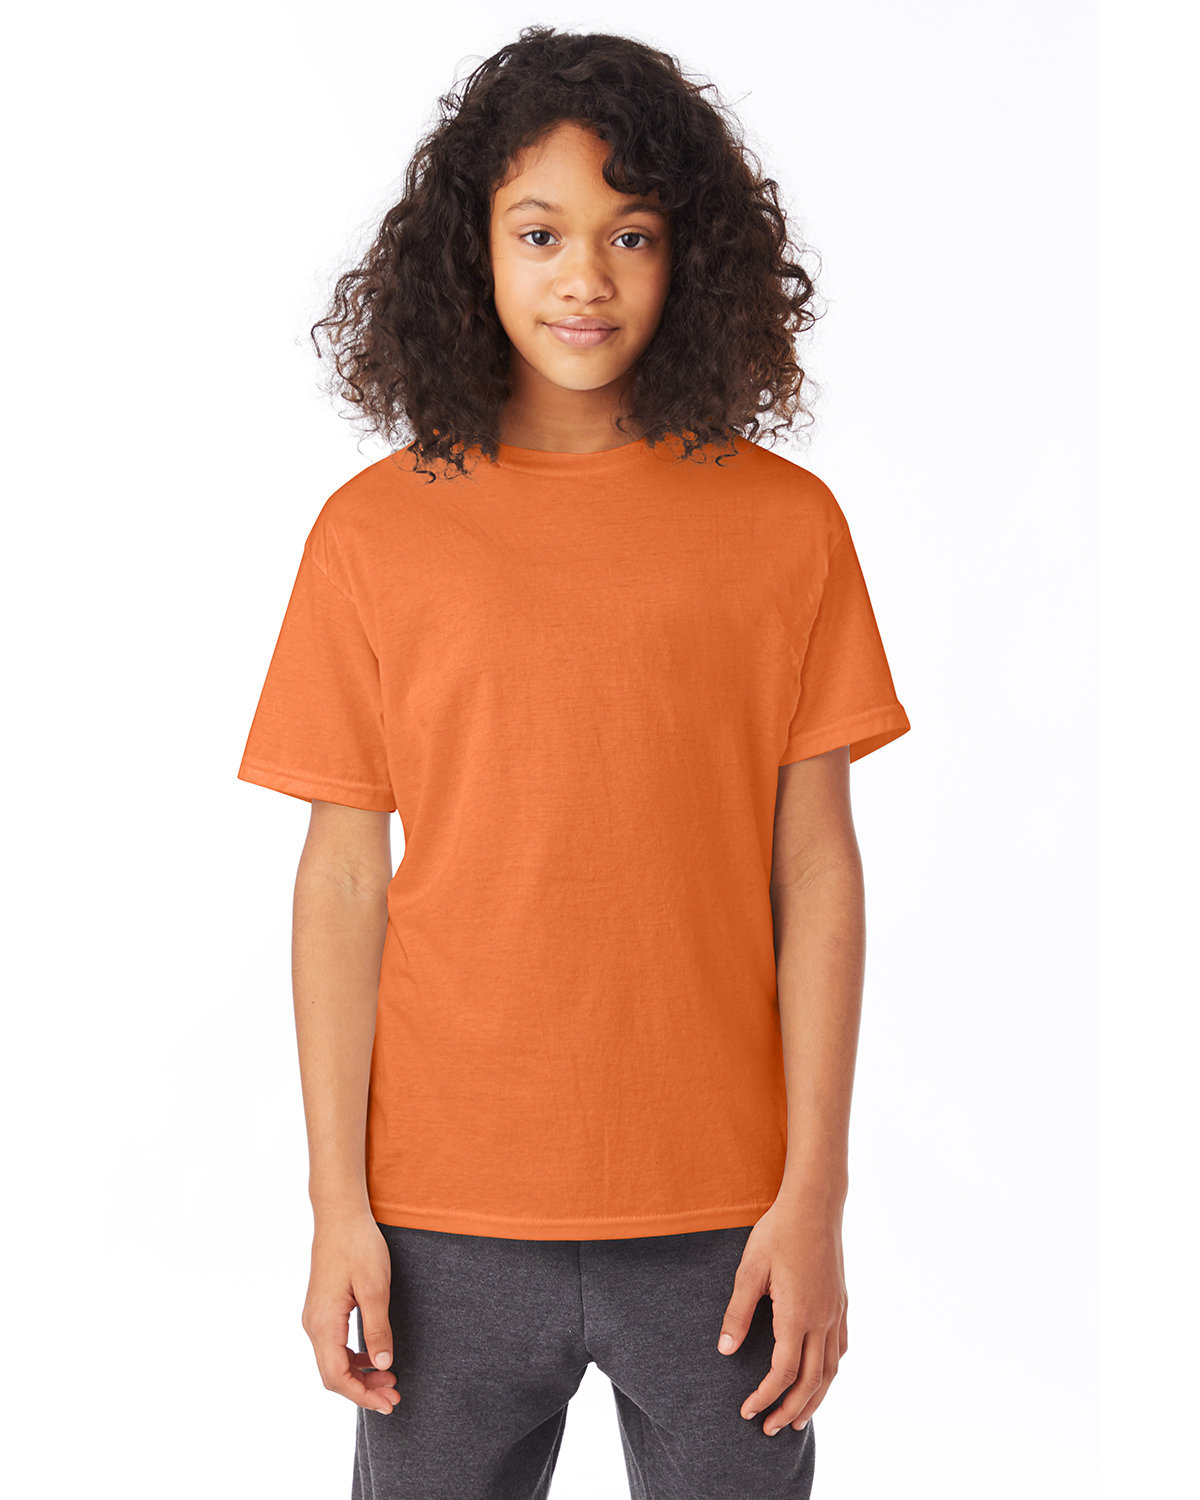 Hanes Youth 50/50 T-Shirt SAFETY ORANGE 